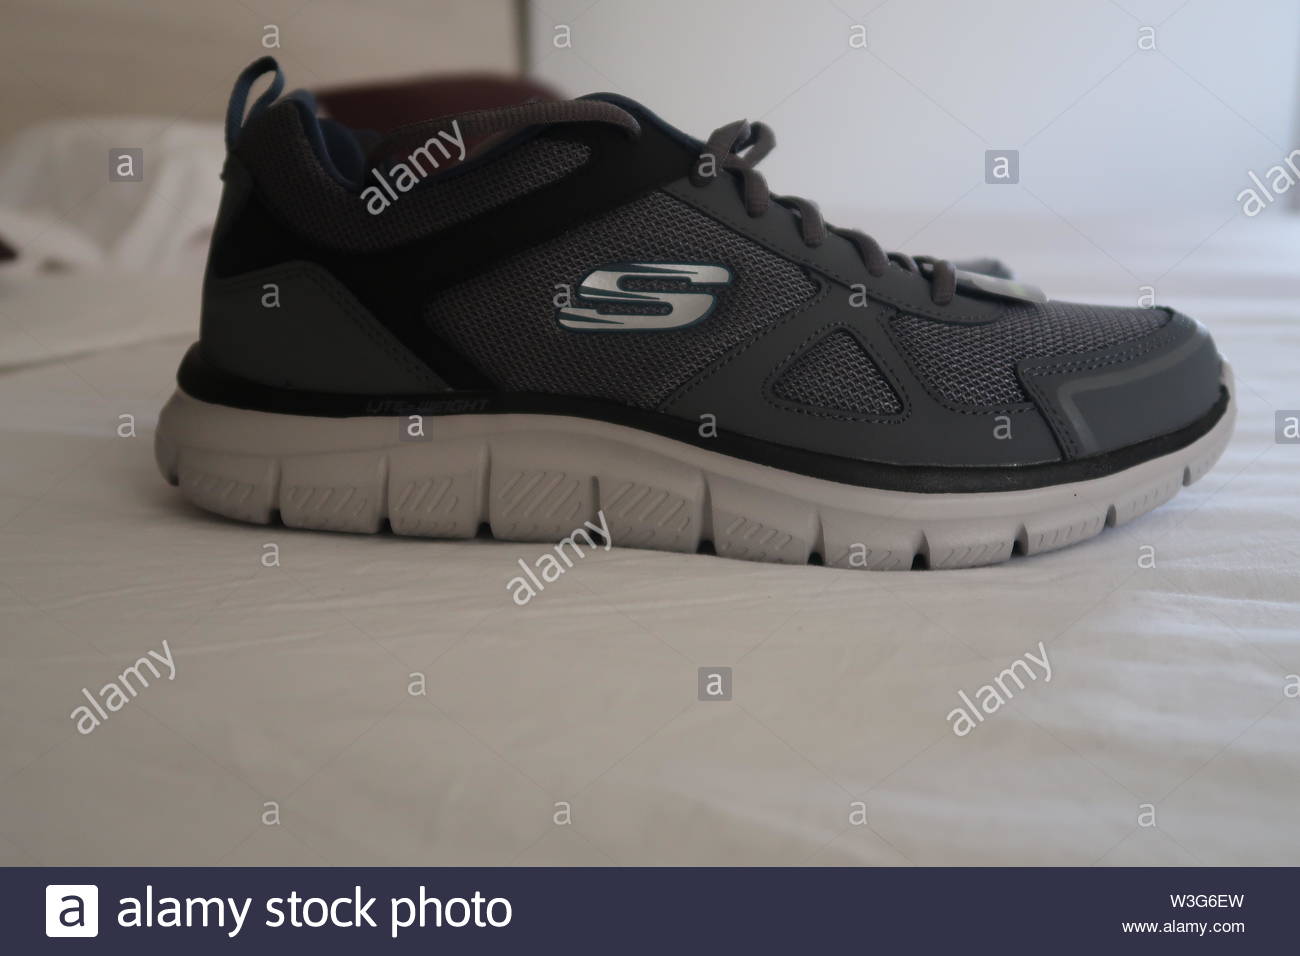 anel racing shoes